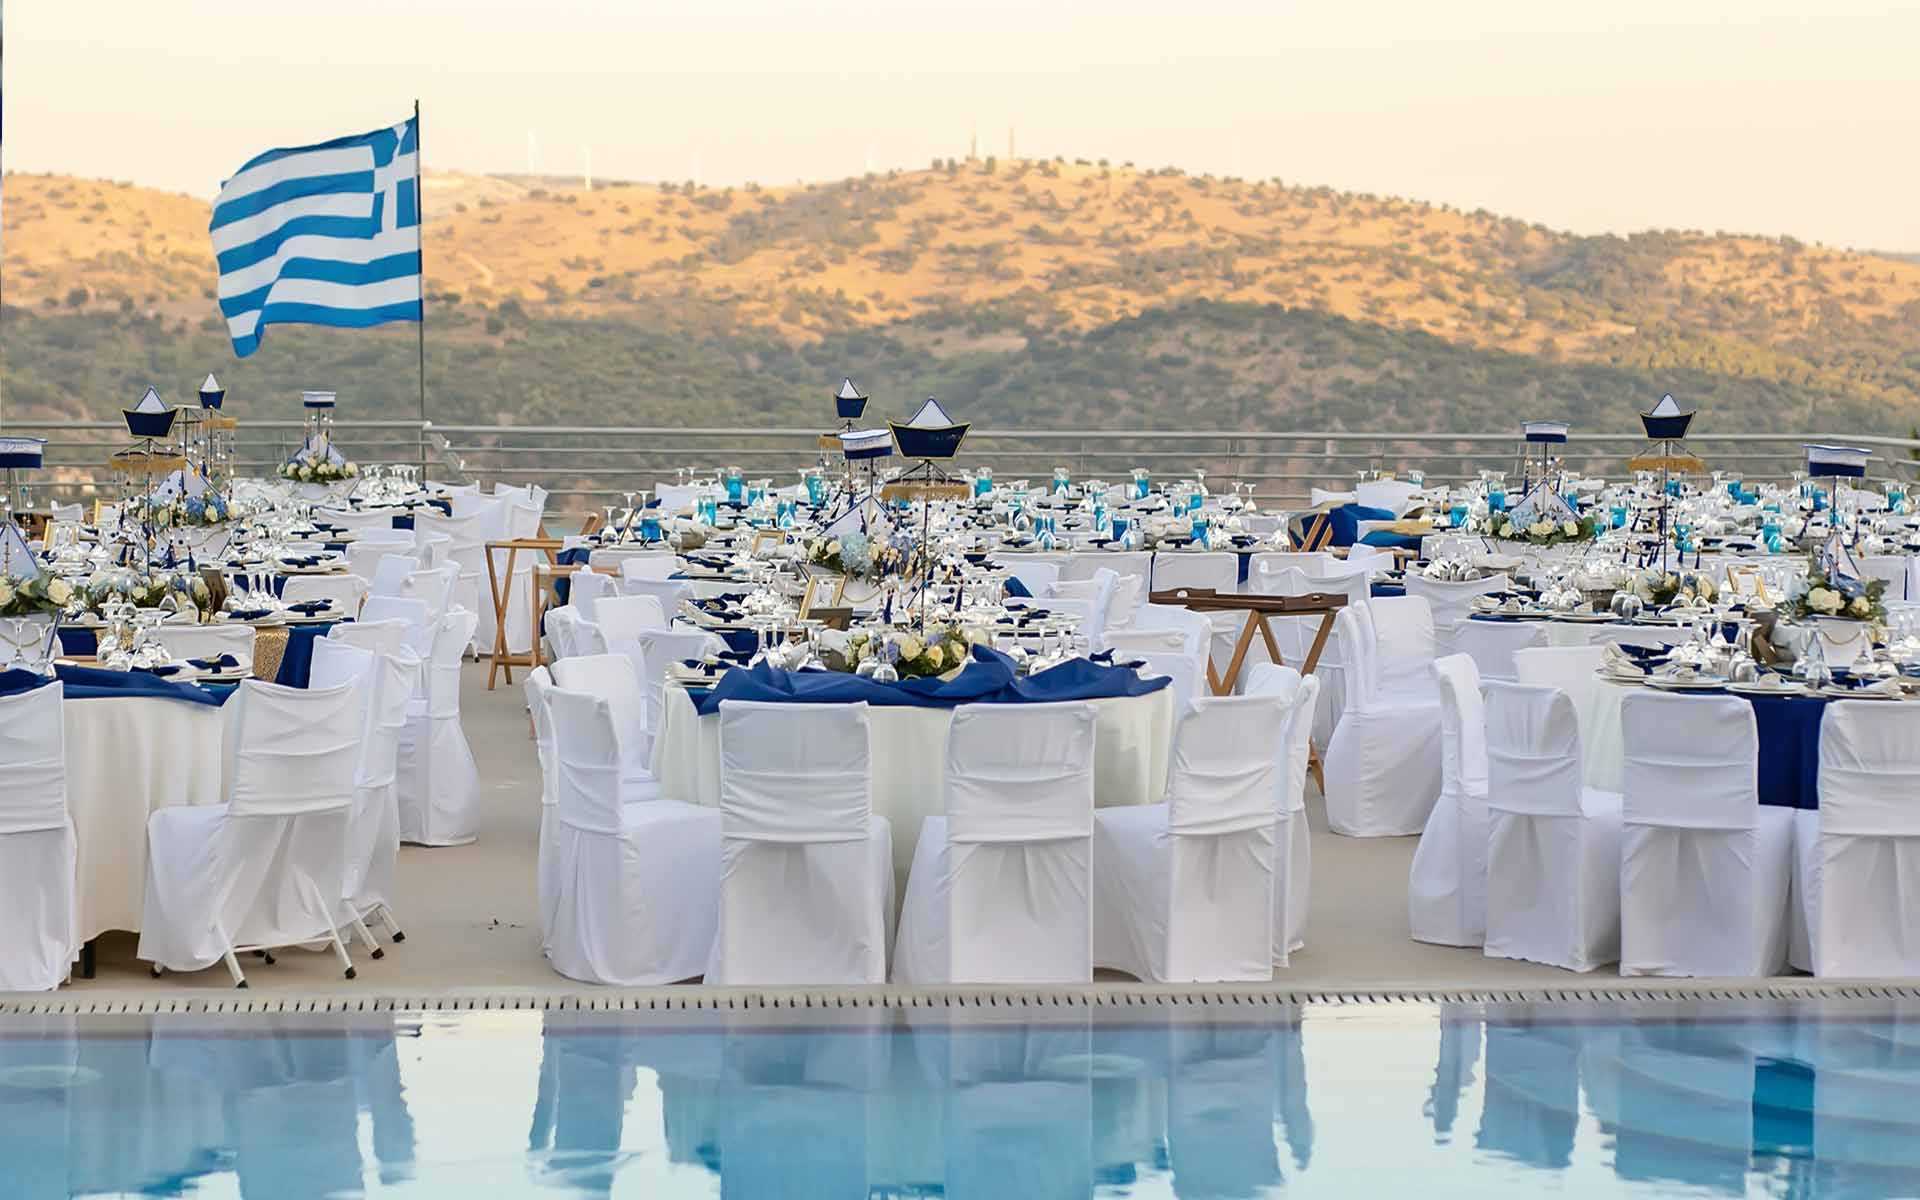 Rogdaki Events Trademark - Luxury Wedding & Event Planning Services in Greece